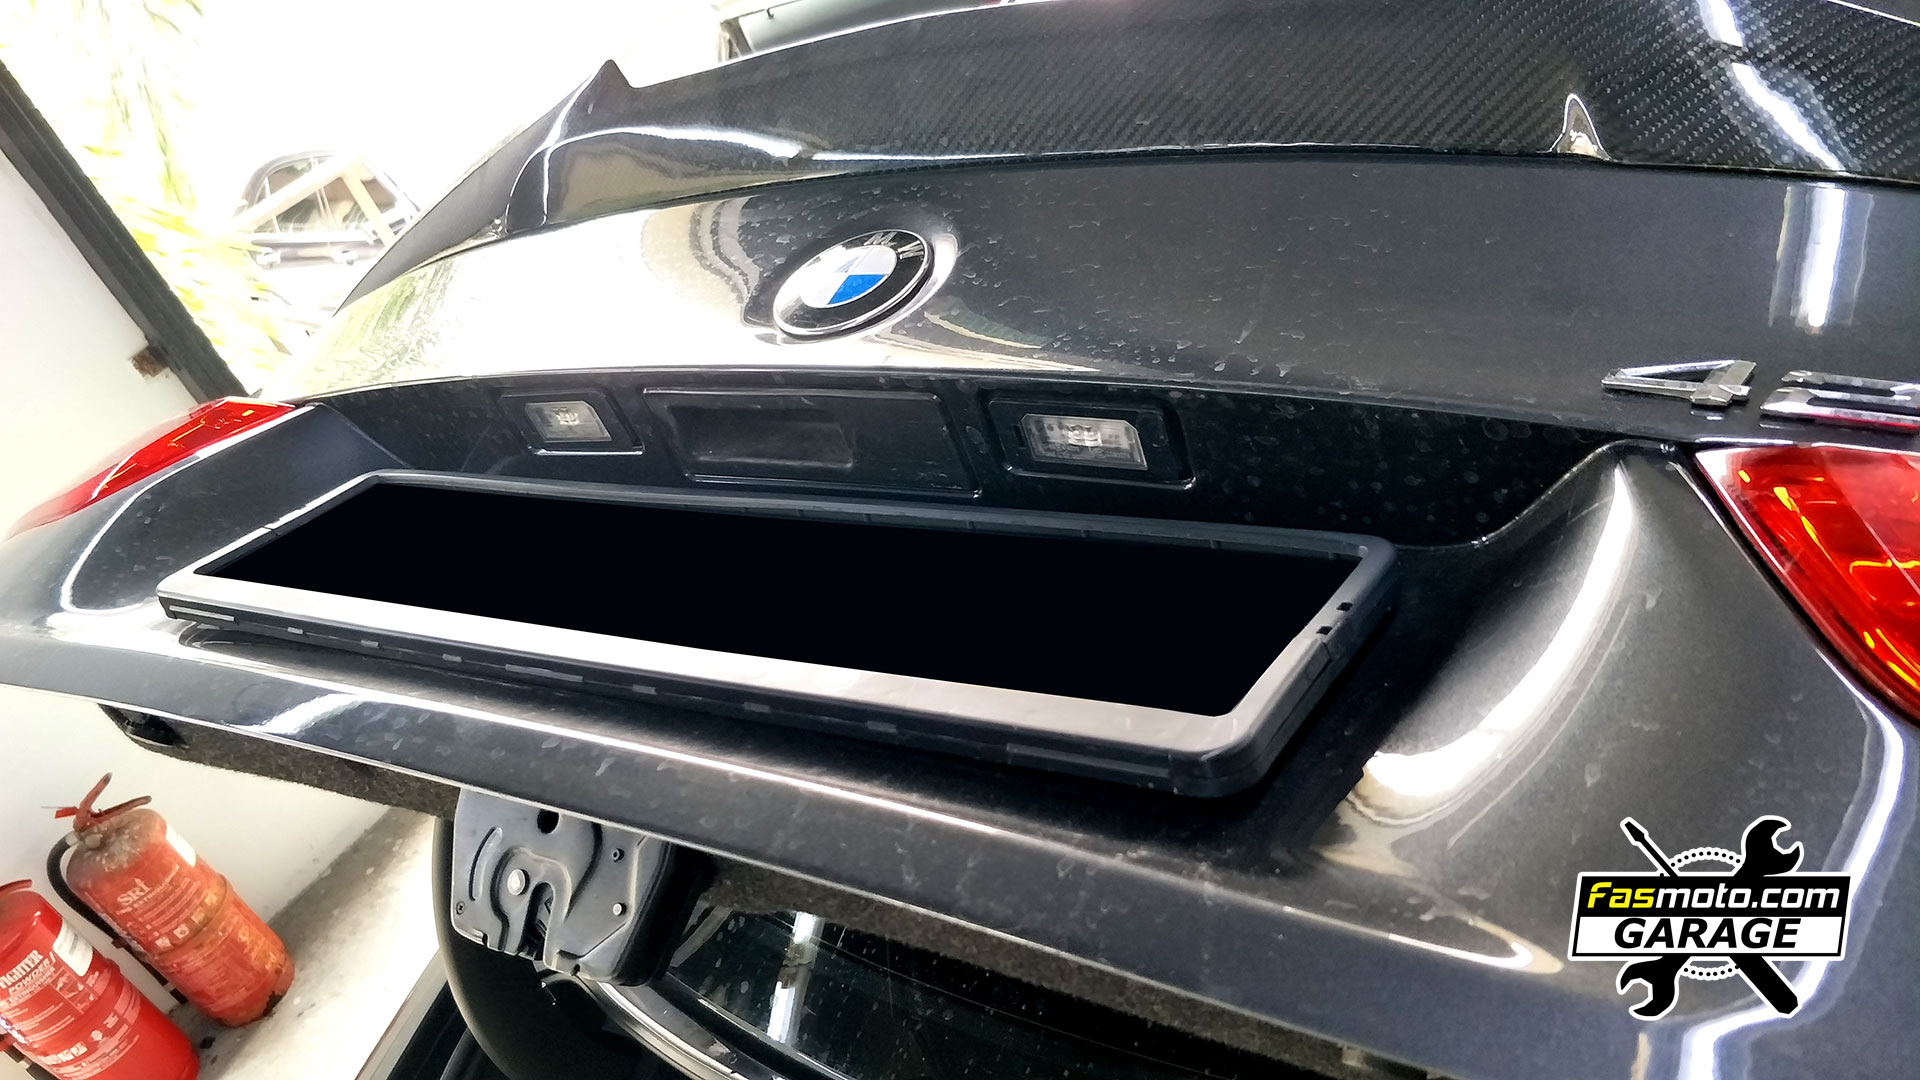 BMW 420i - 4 Series F32  Rear Camera Install